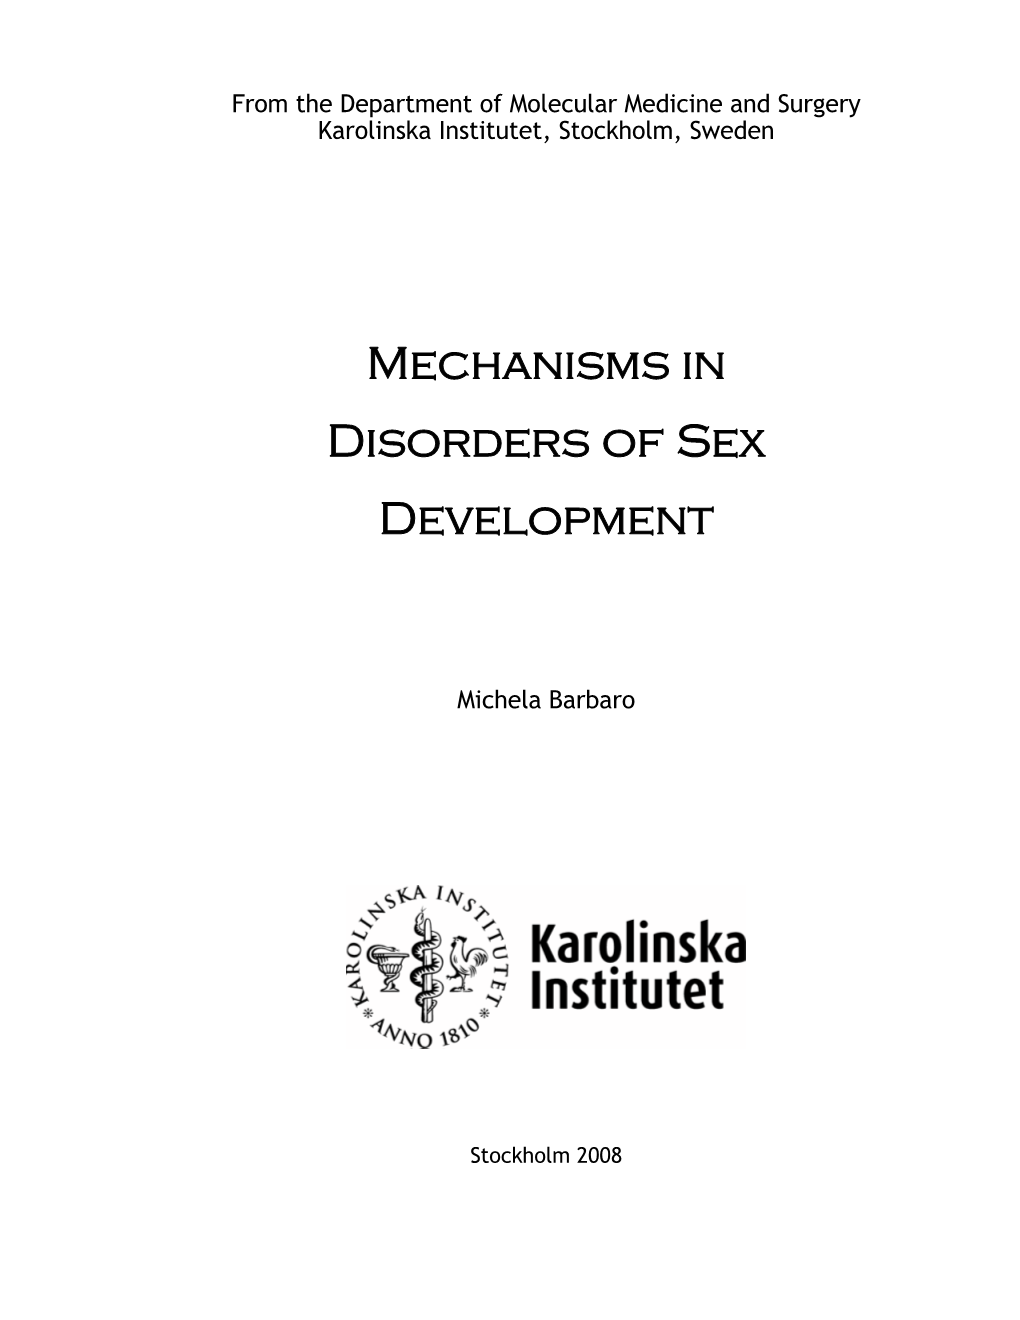 Mechanisms in Disorders of Sex Development